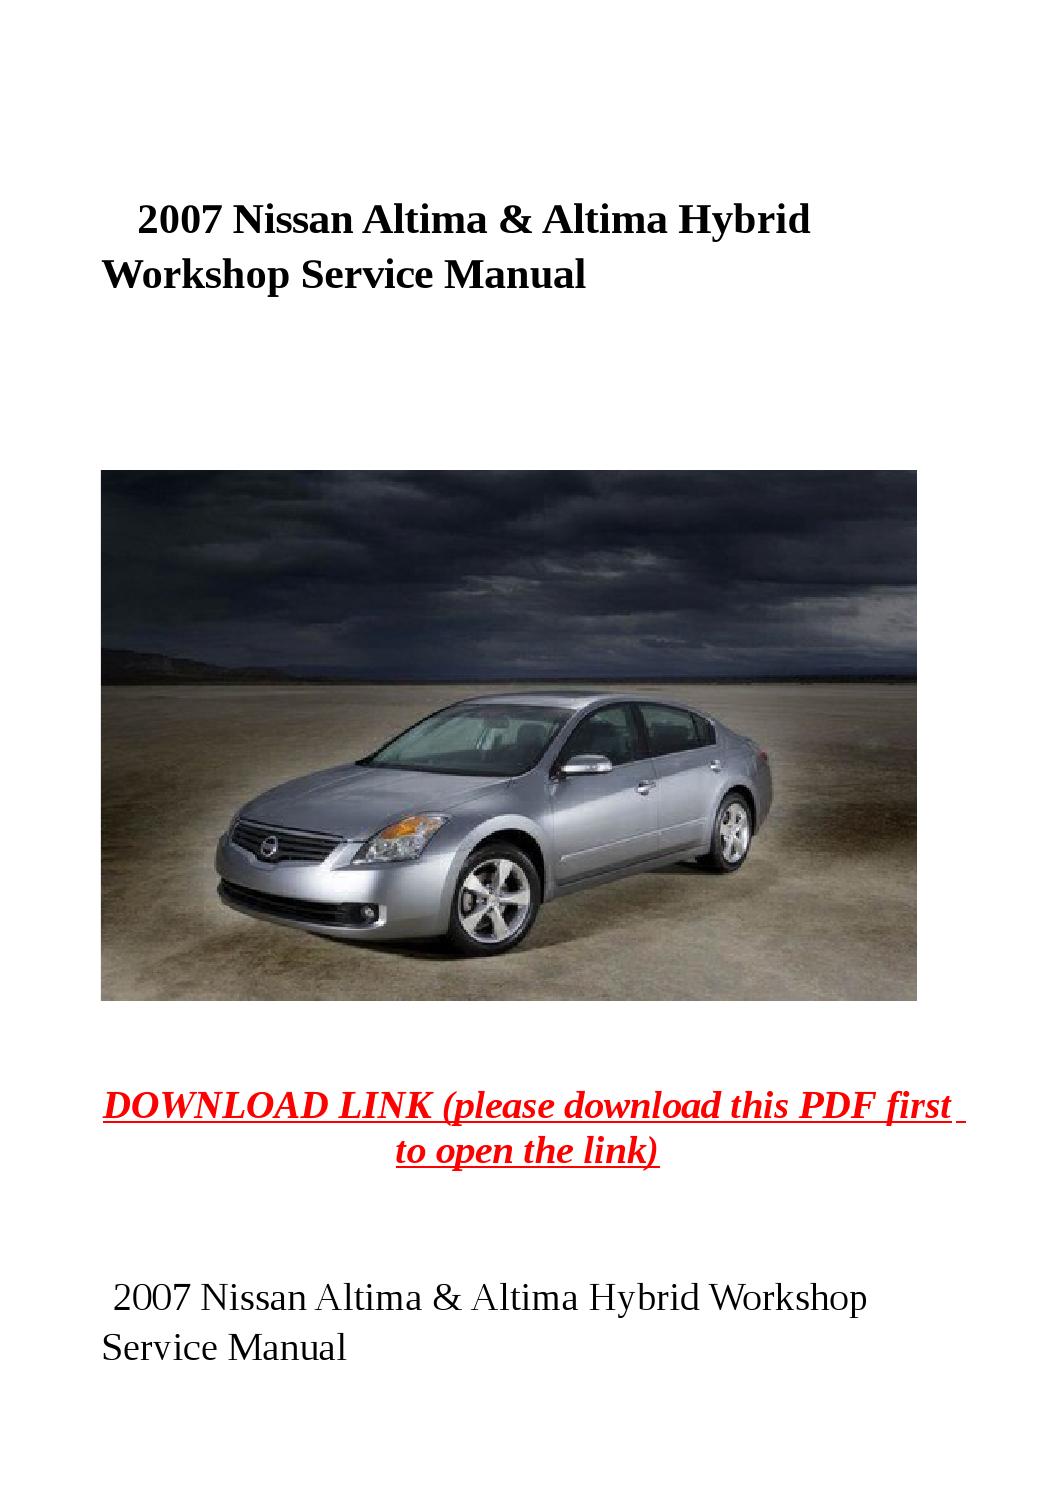 2007 nissan altima service manual download